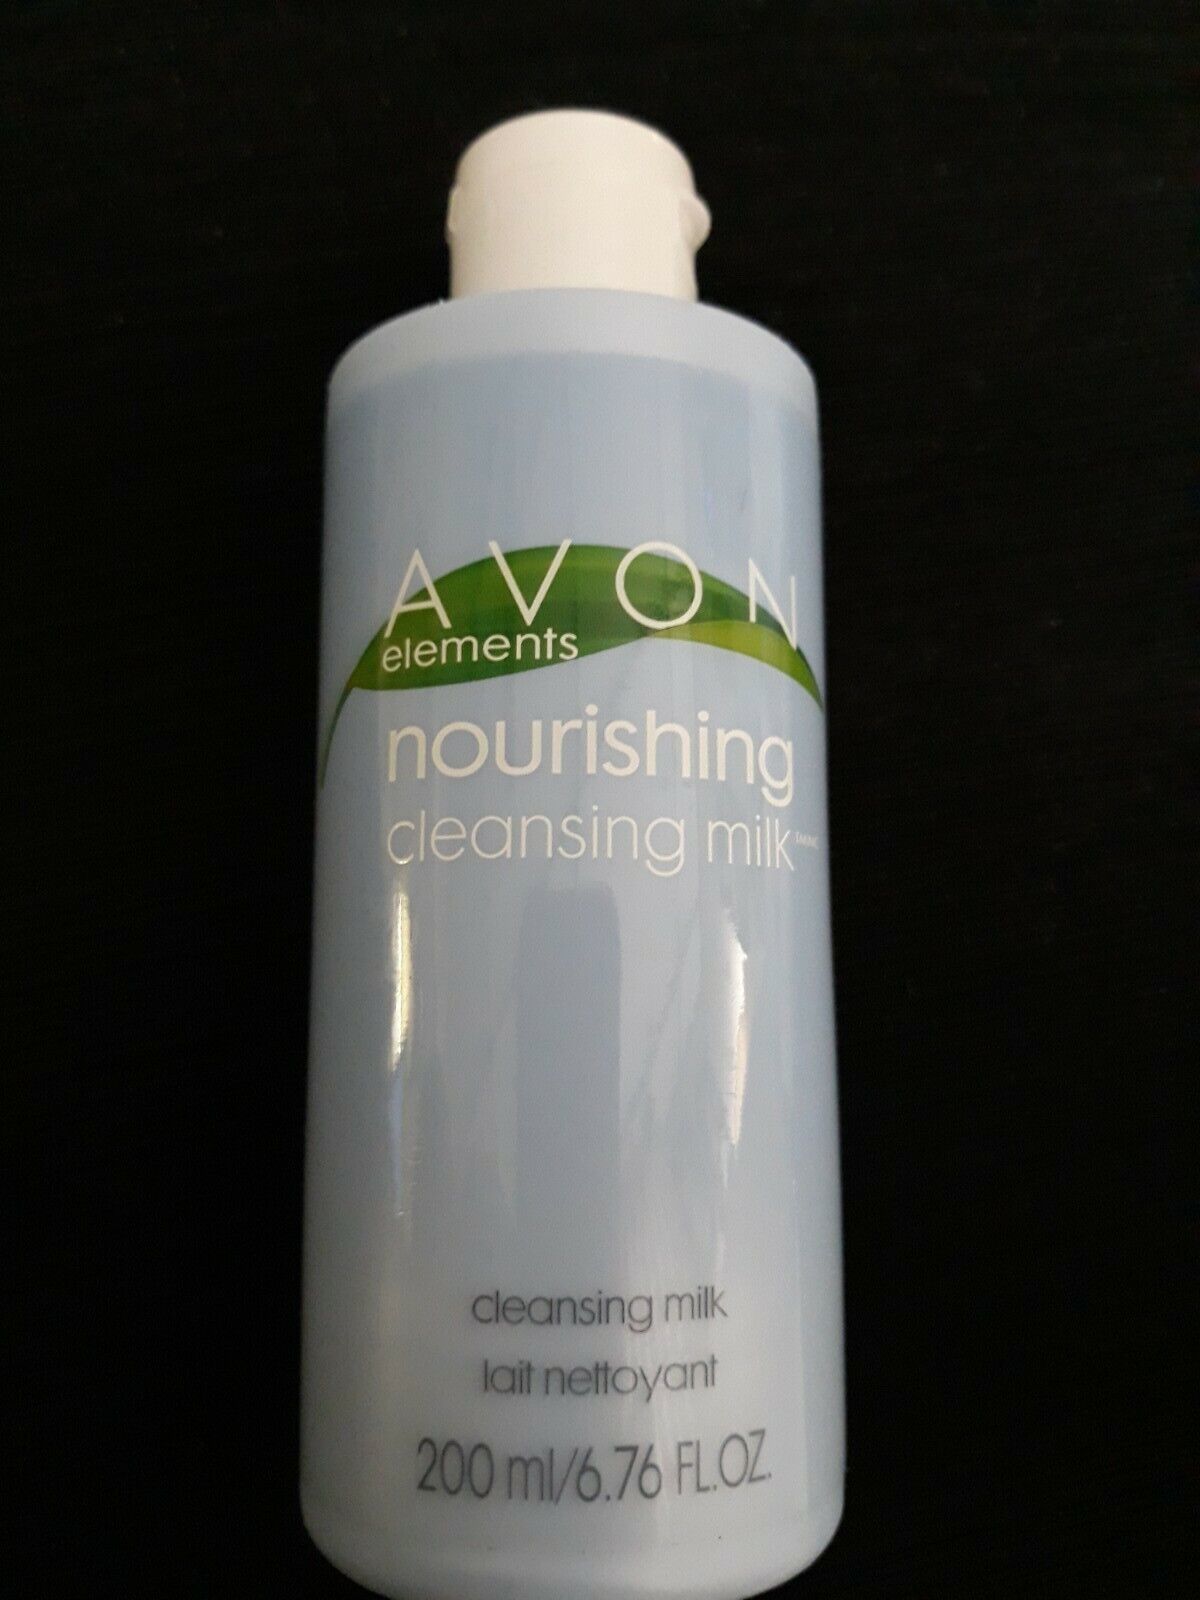 Avon Elements Nourishing Cleansing Milk 6.76 fl oz - (Discontinued) - New!!! - $13.99